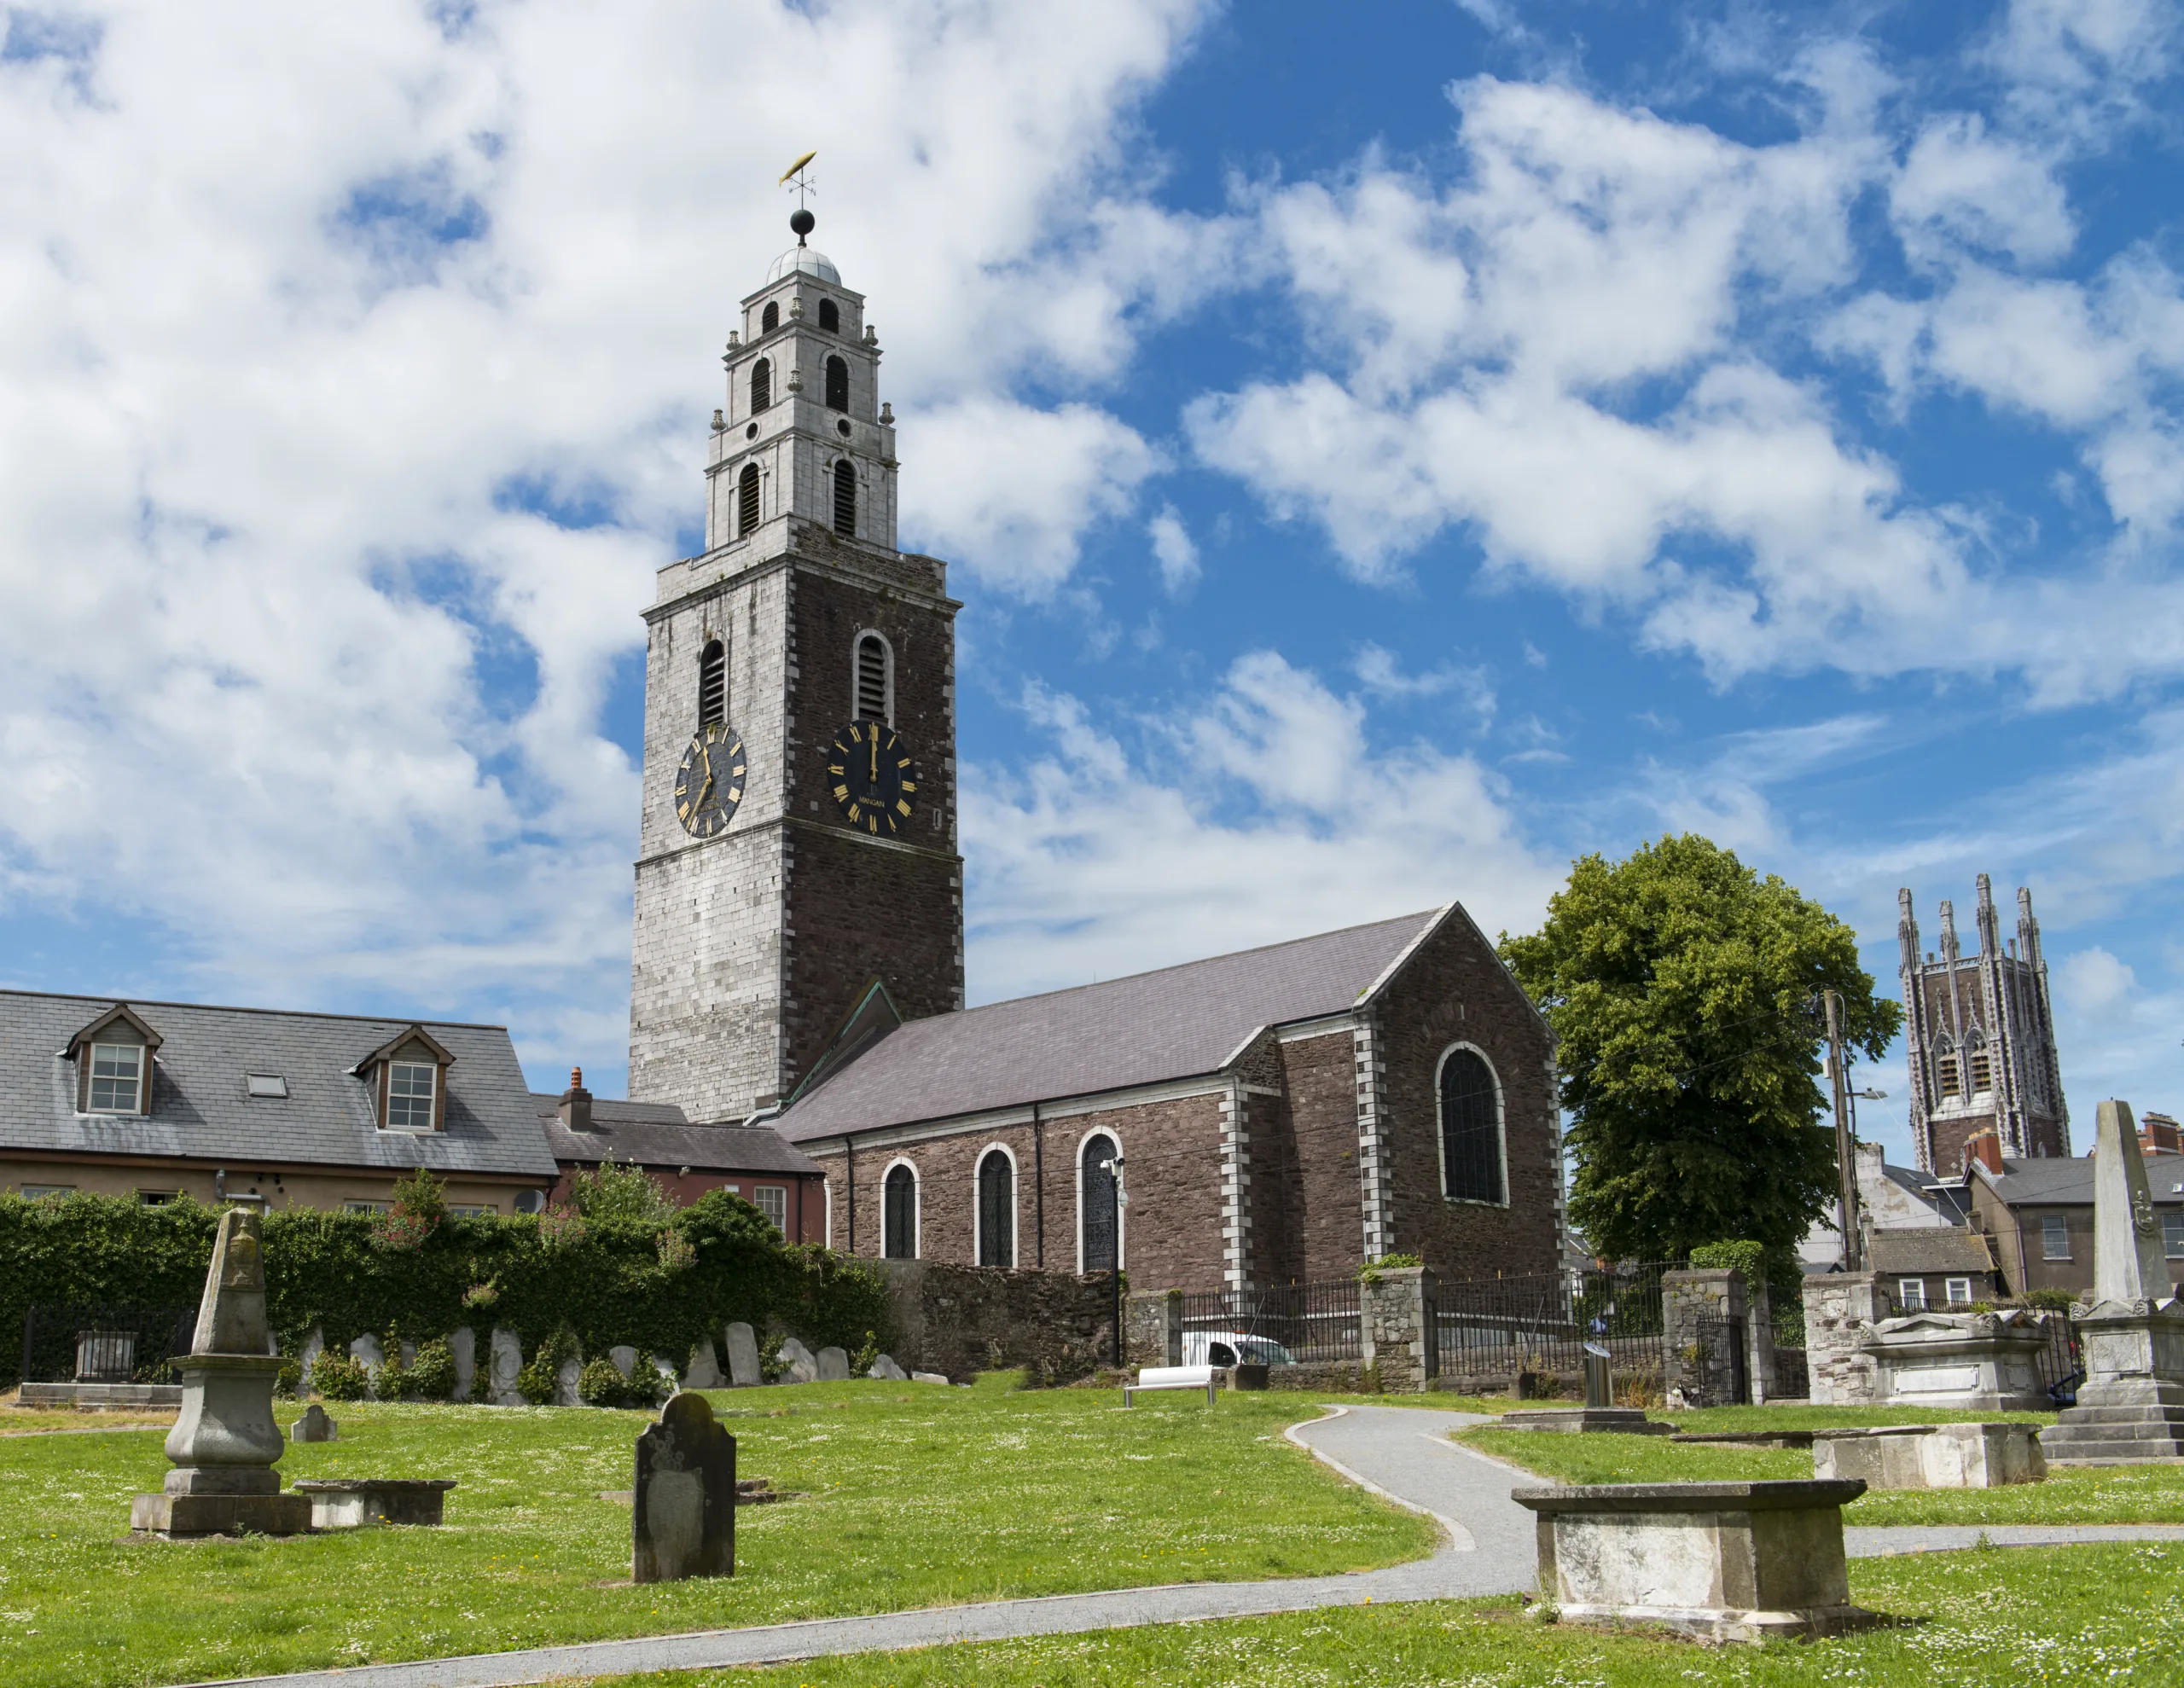 Exterior of St. Anne’s Church and graveyard, Cork, Ireland